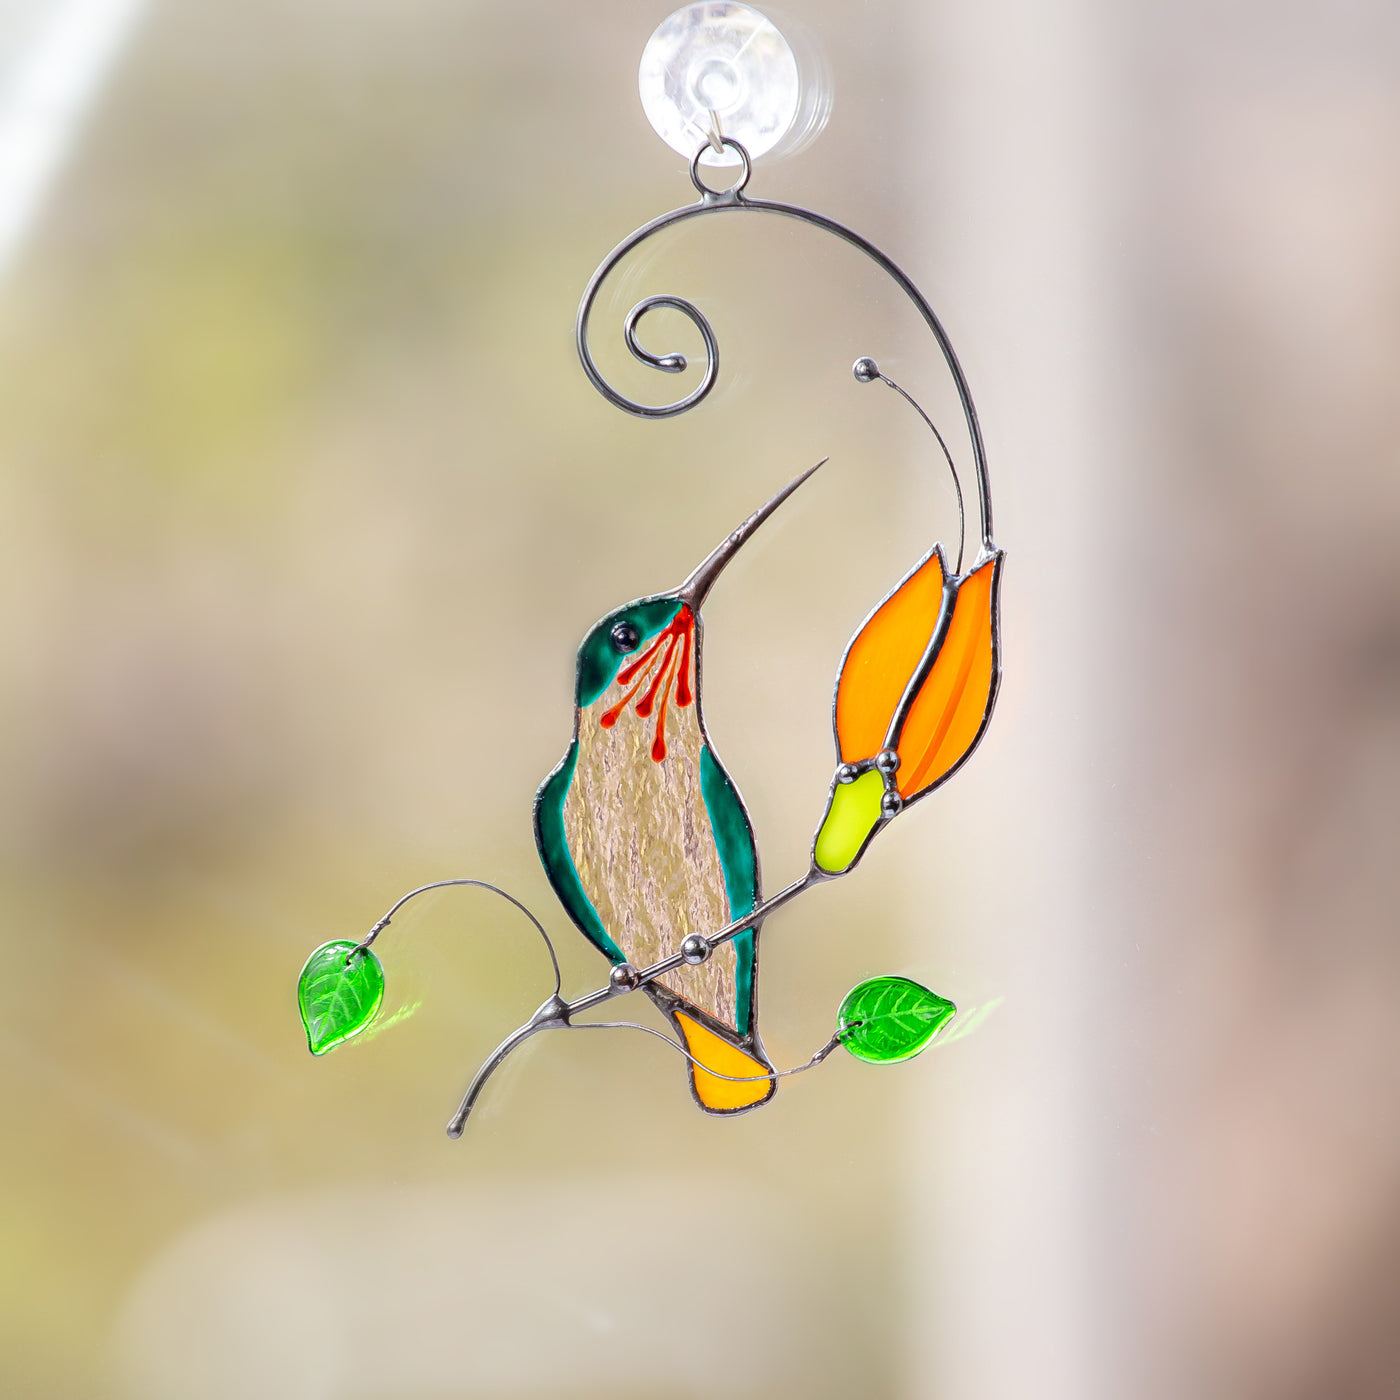 Hummingbird sitting on the branch with orange flower window hanging